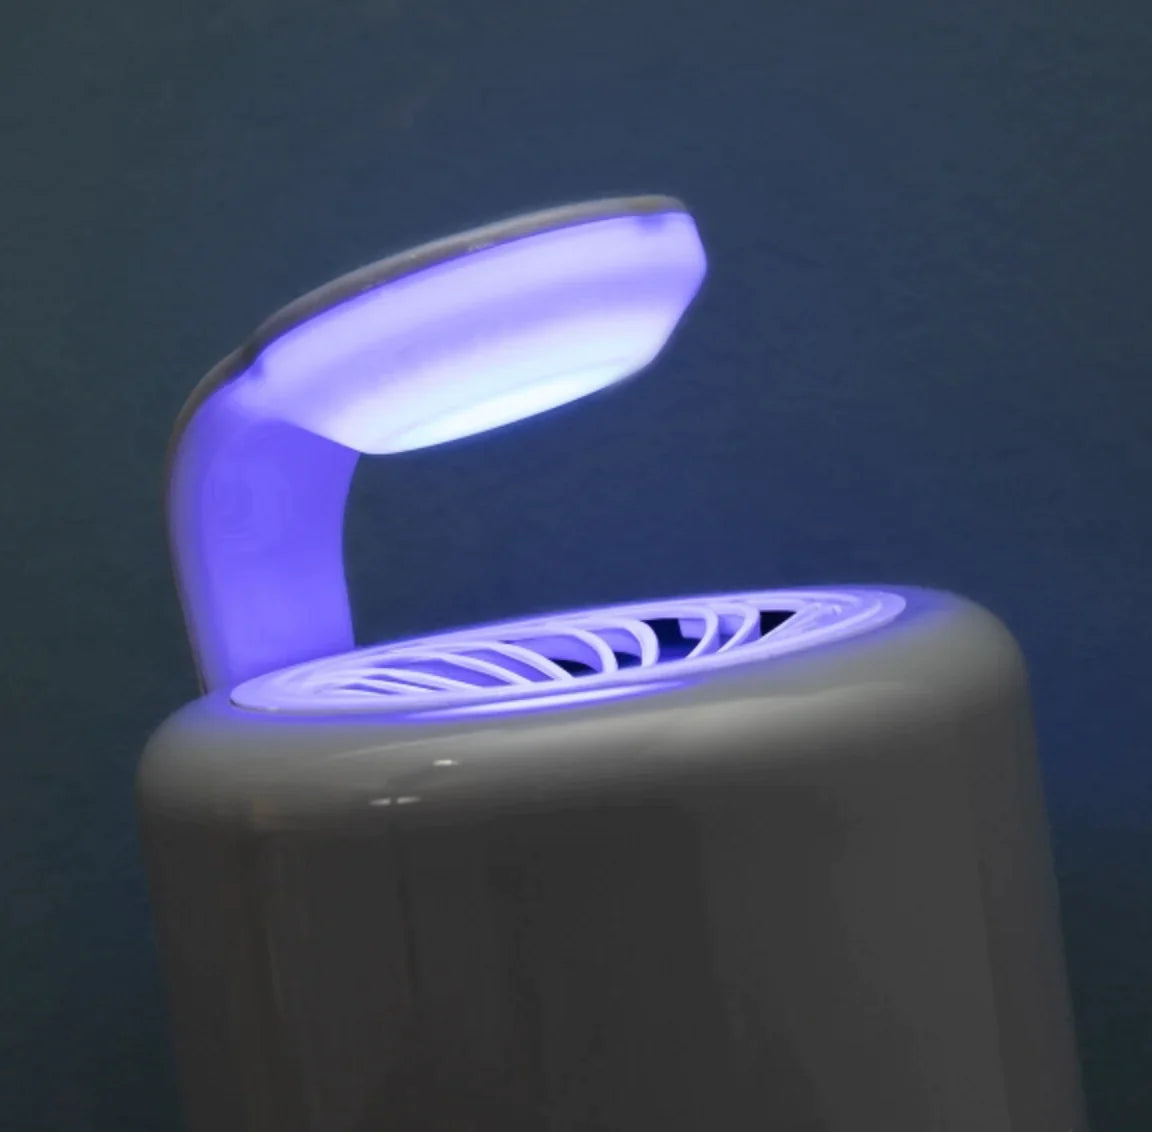 Anti-mosquito suction lamp